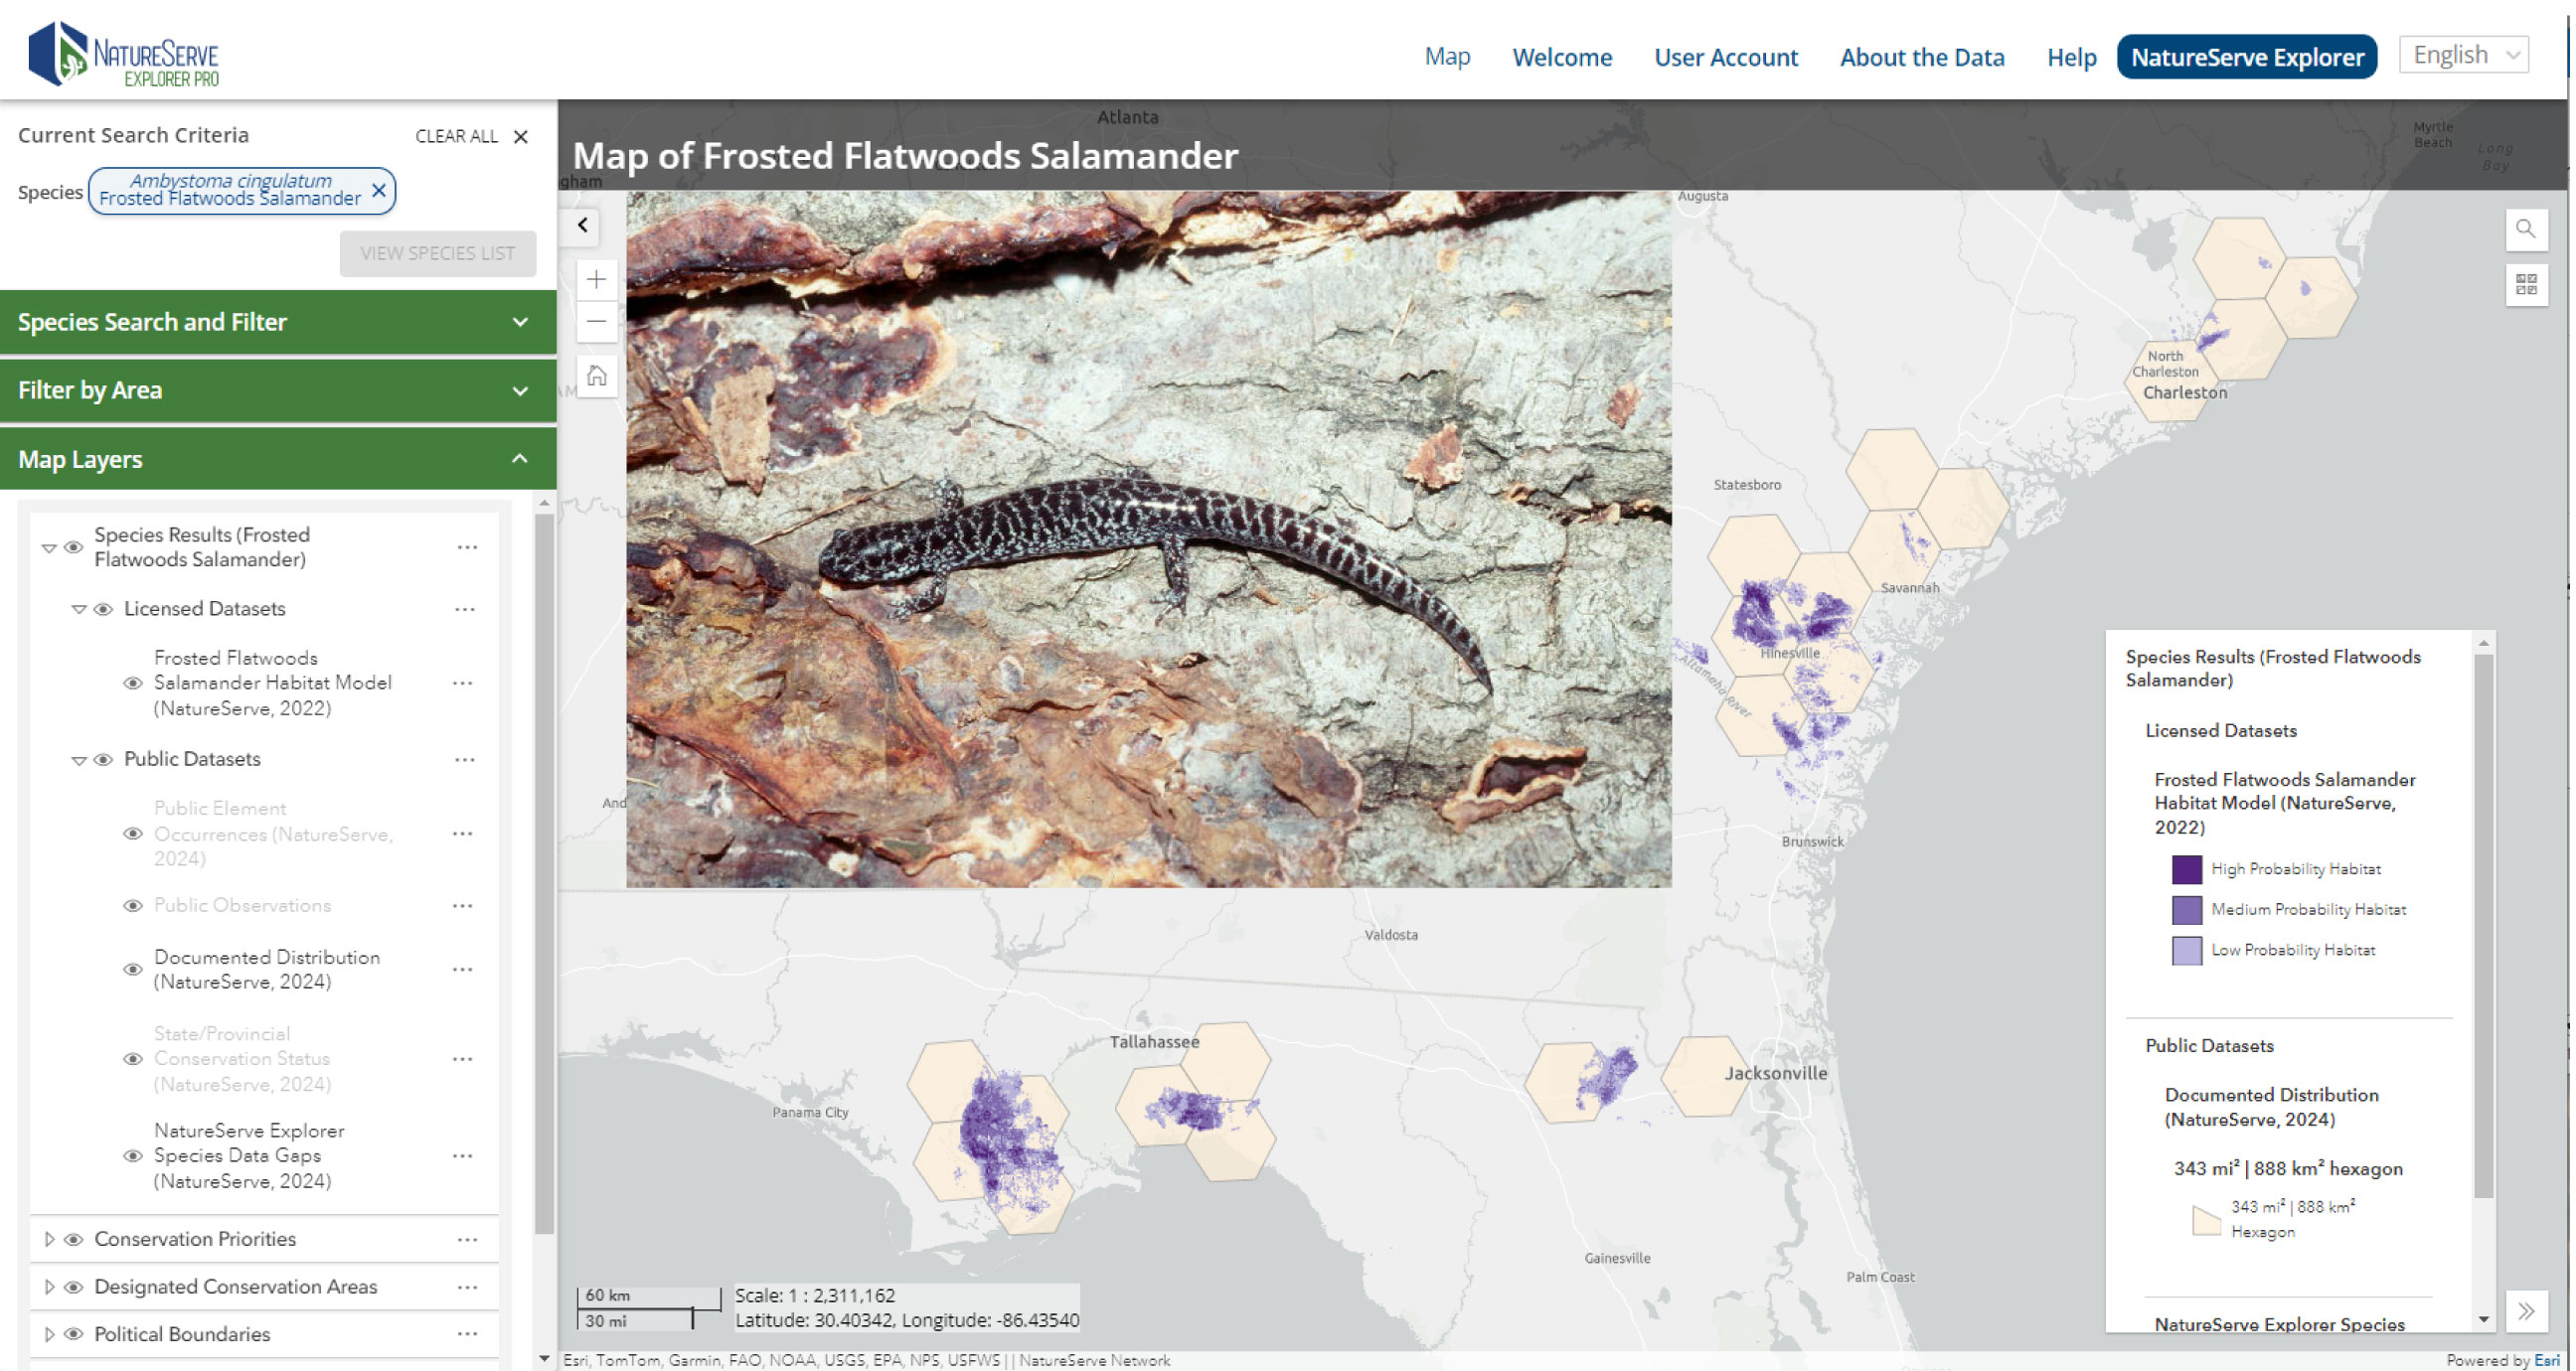 NatureServe Explorer Pro provides predictive habitat models for sensitive species like the Frosted Flatwoods Salamander. Inset photo by USGS.